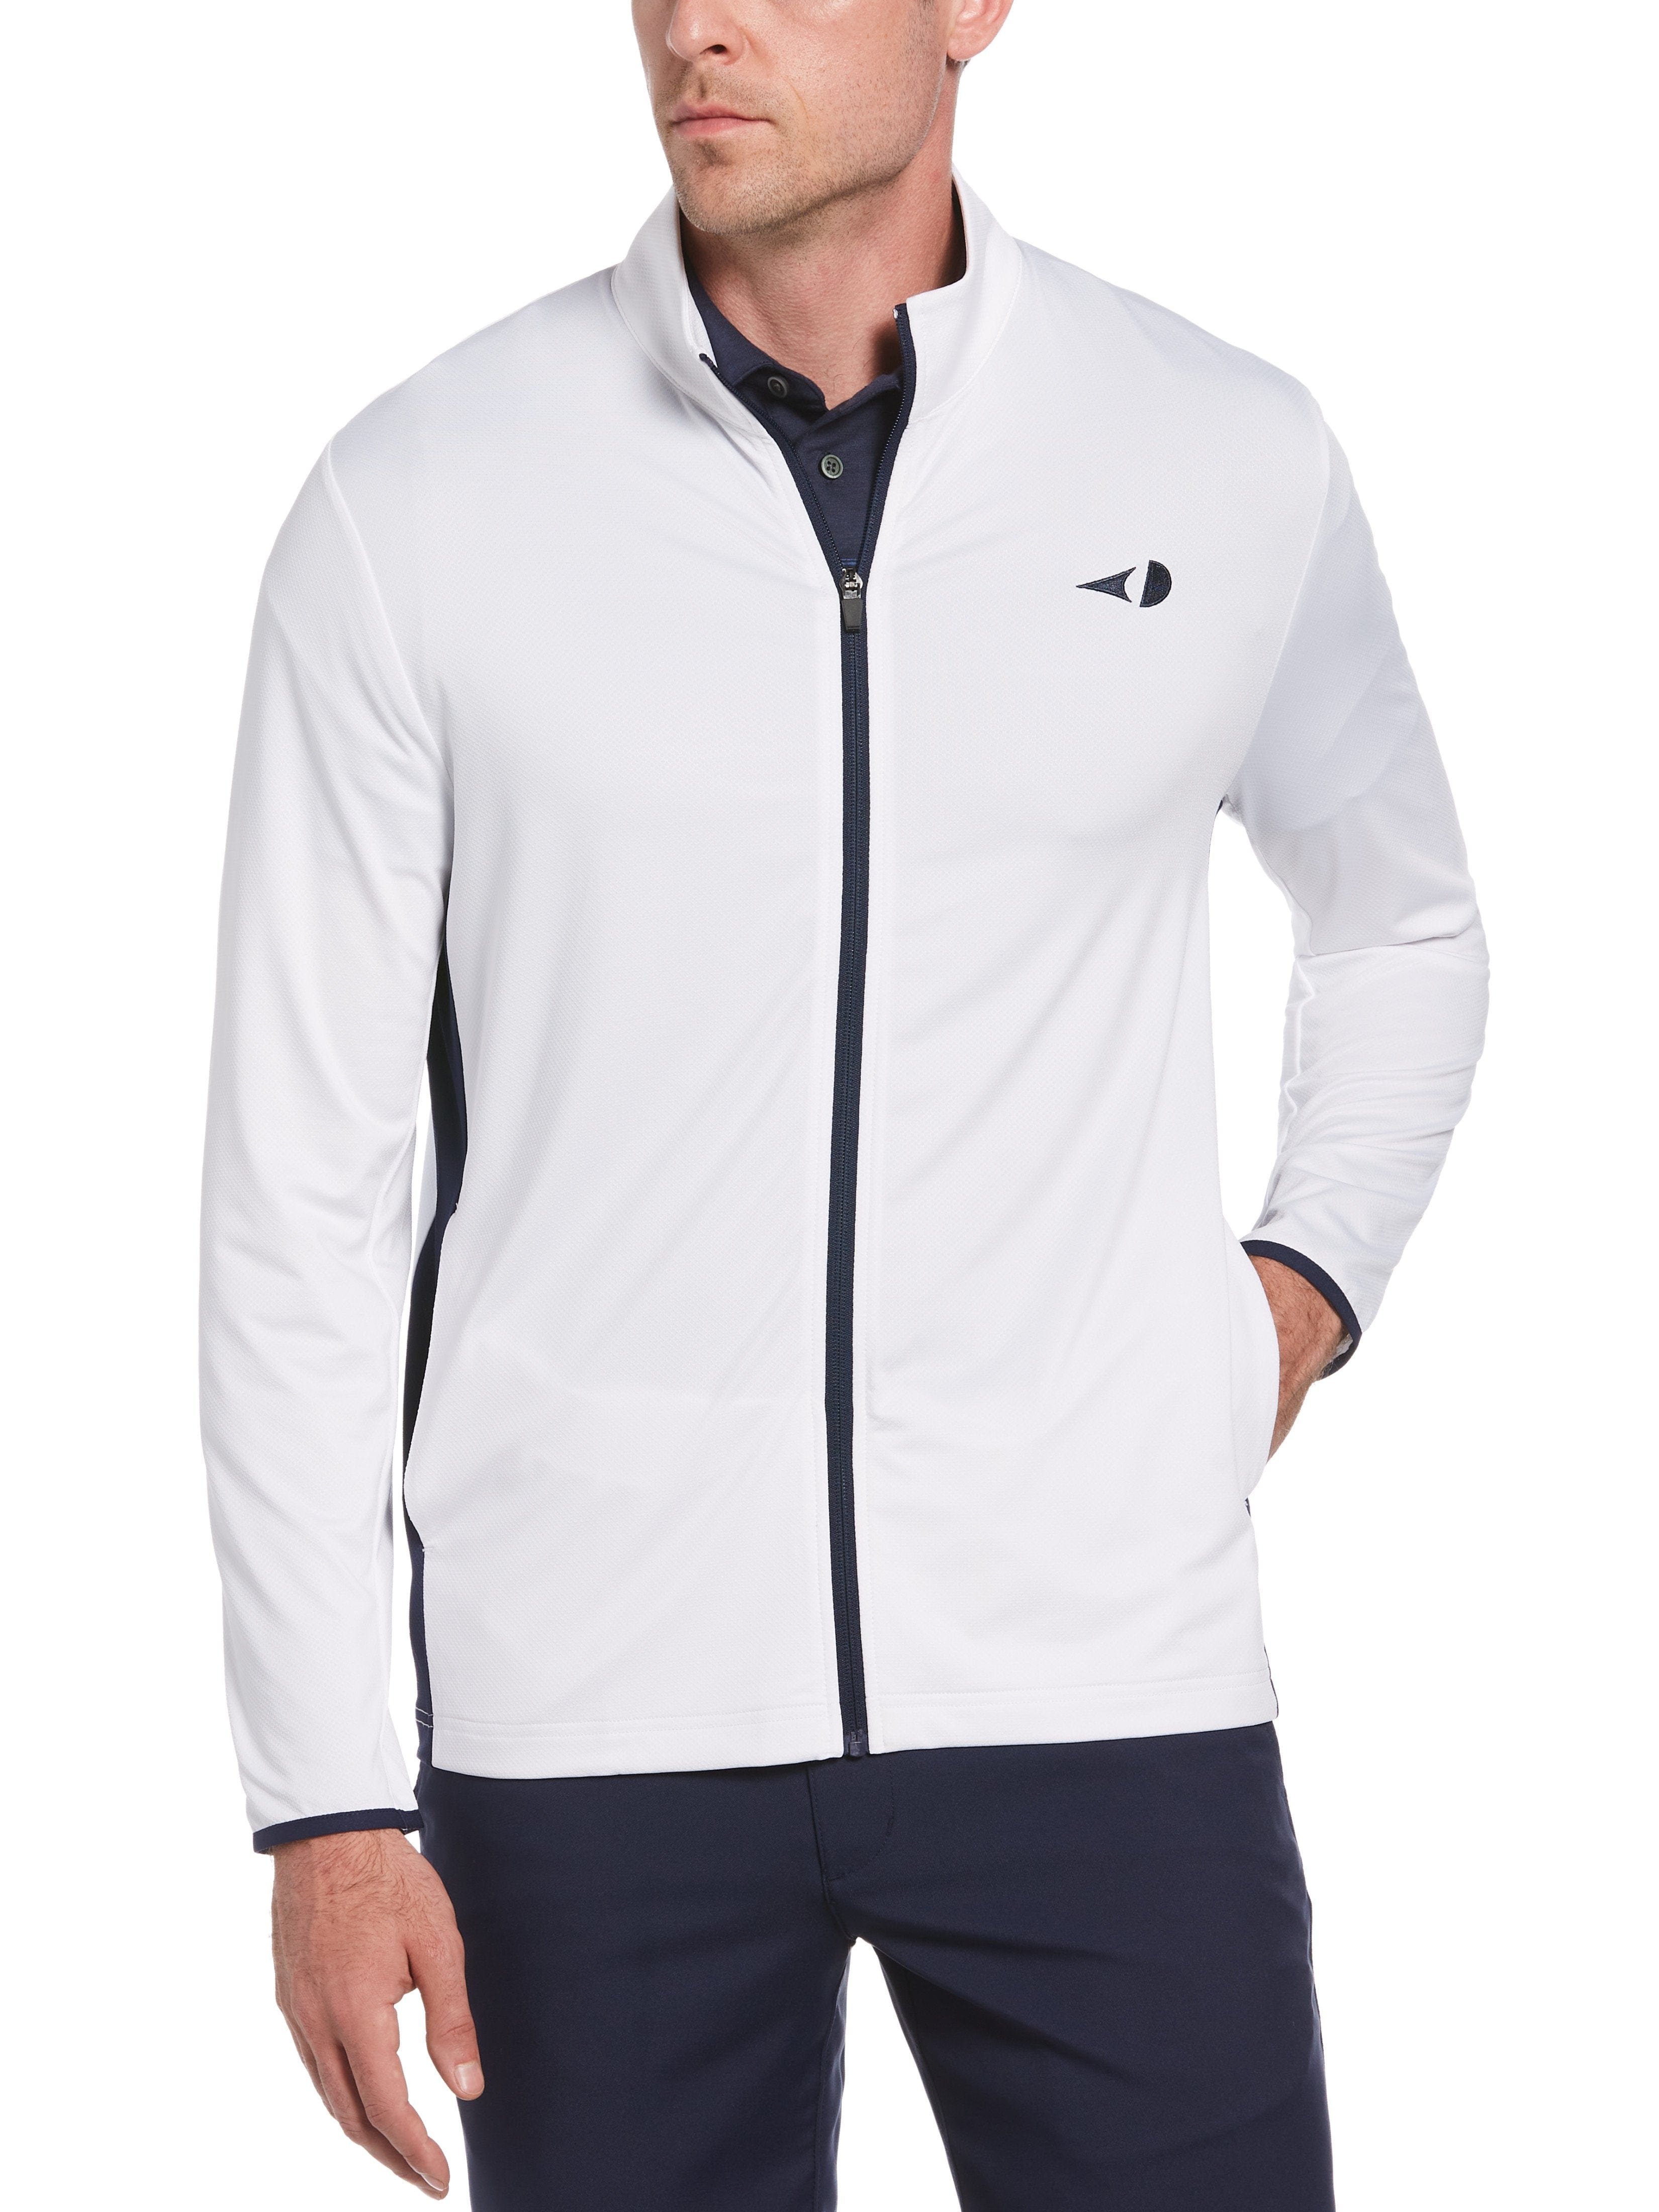 Grand Slam Mens Lightweight Full Zip Base Layer Jacket Top, Size Large, White, Polyester/Elastane | Golf Apparel Shop